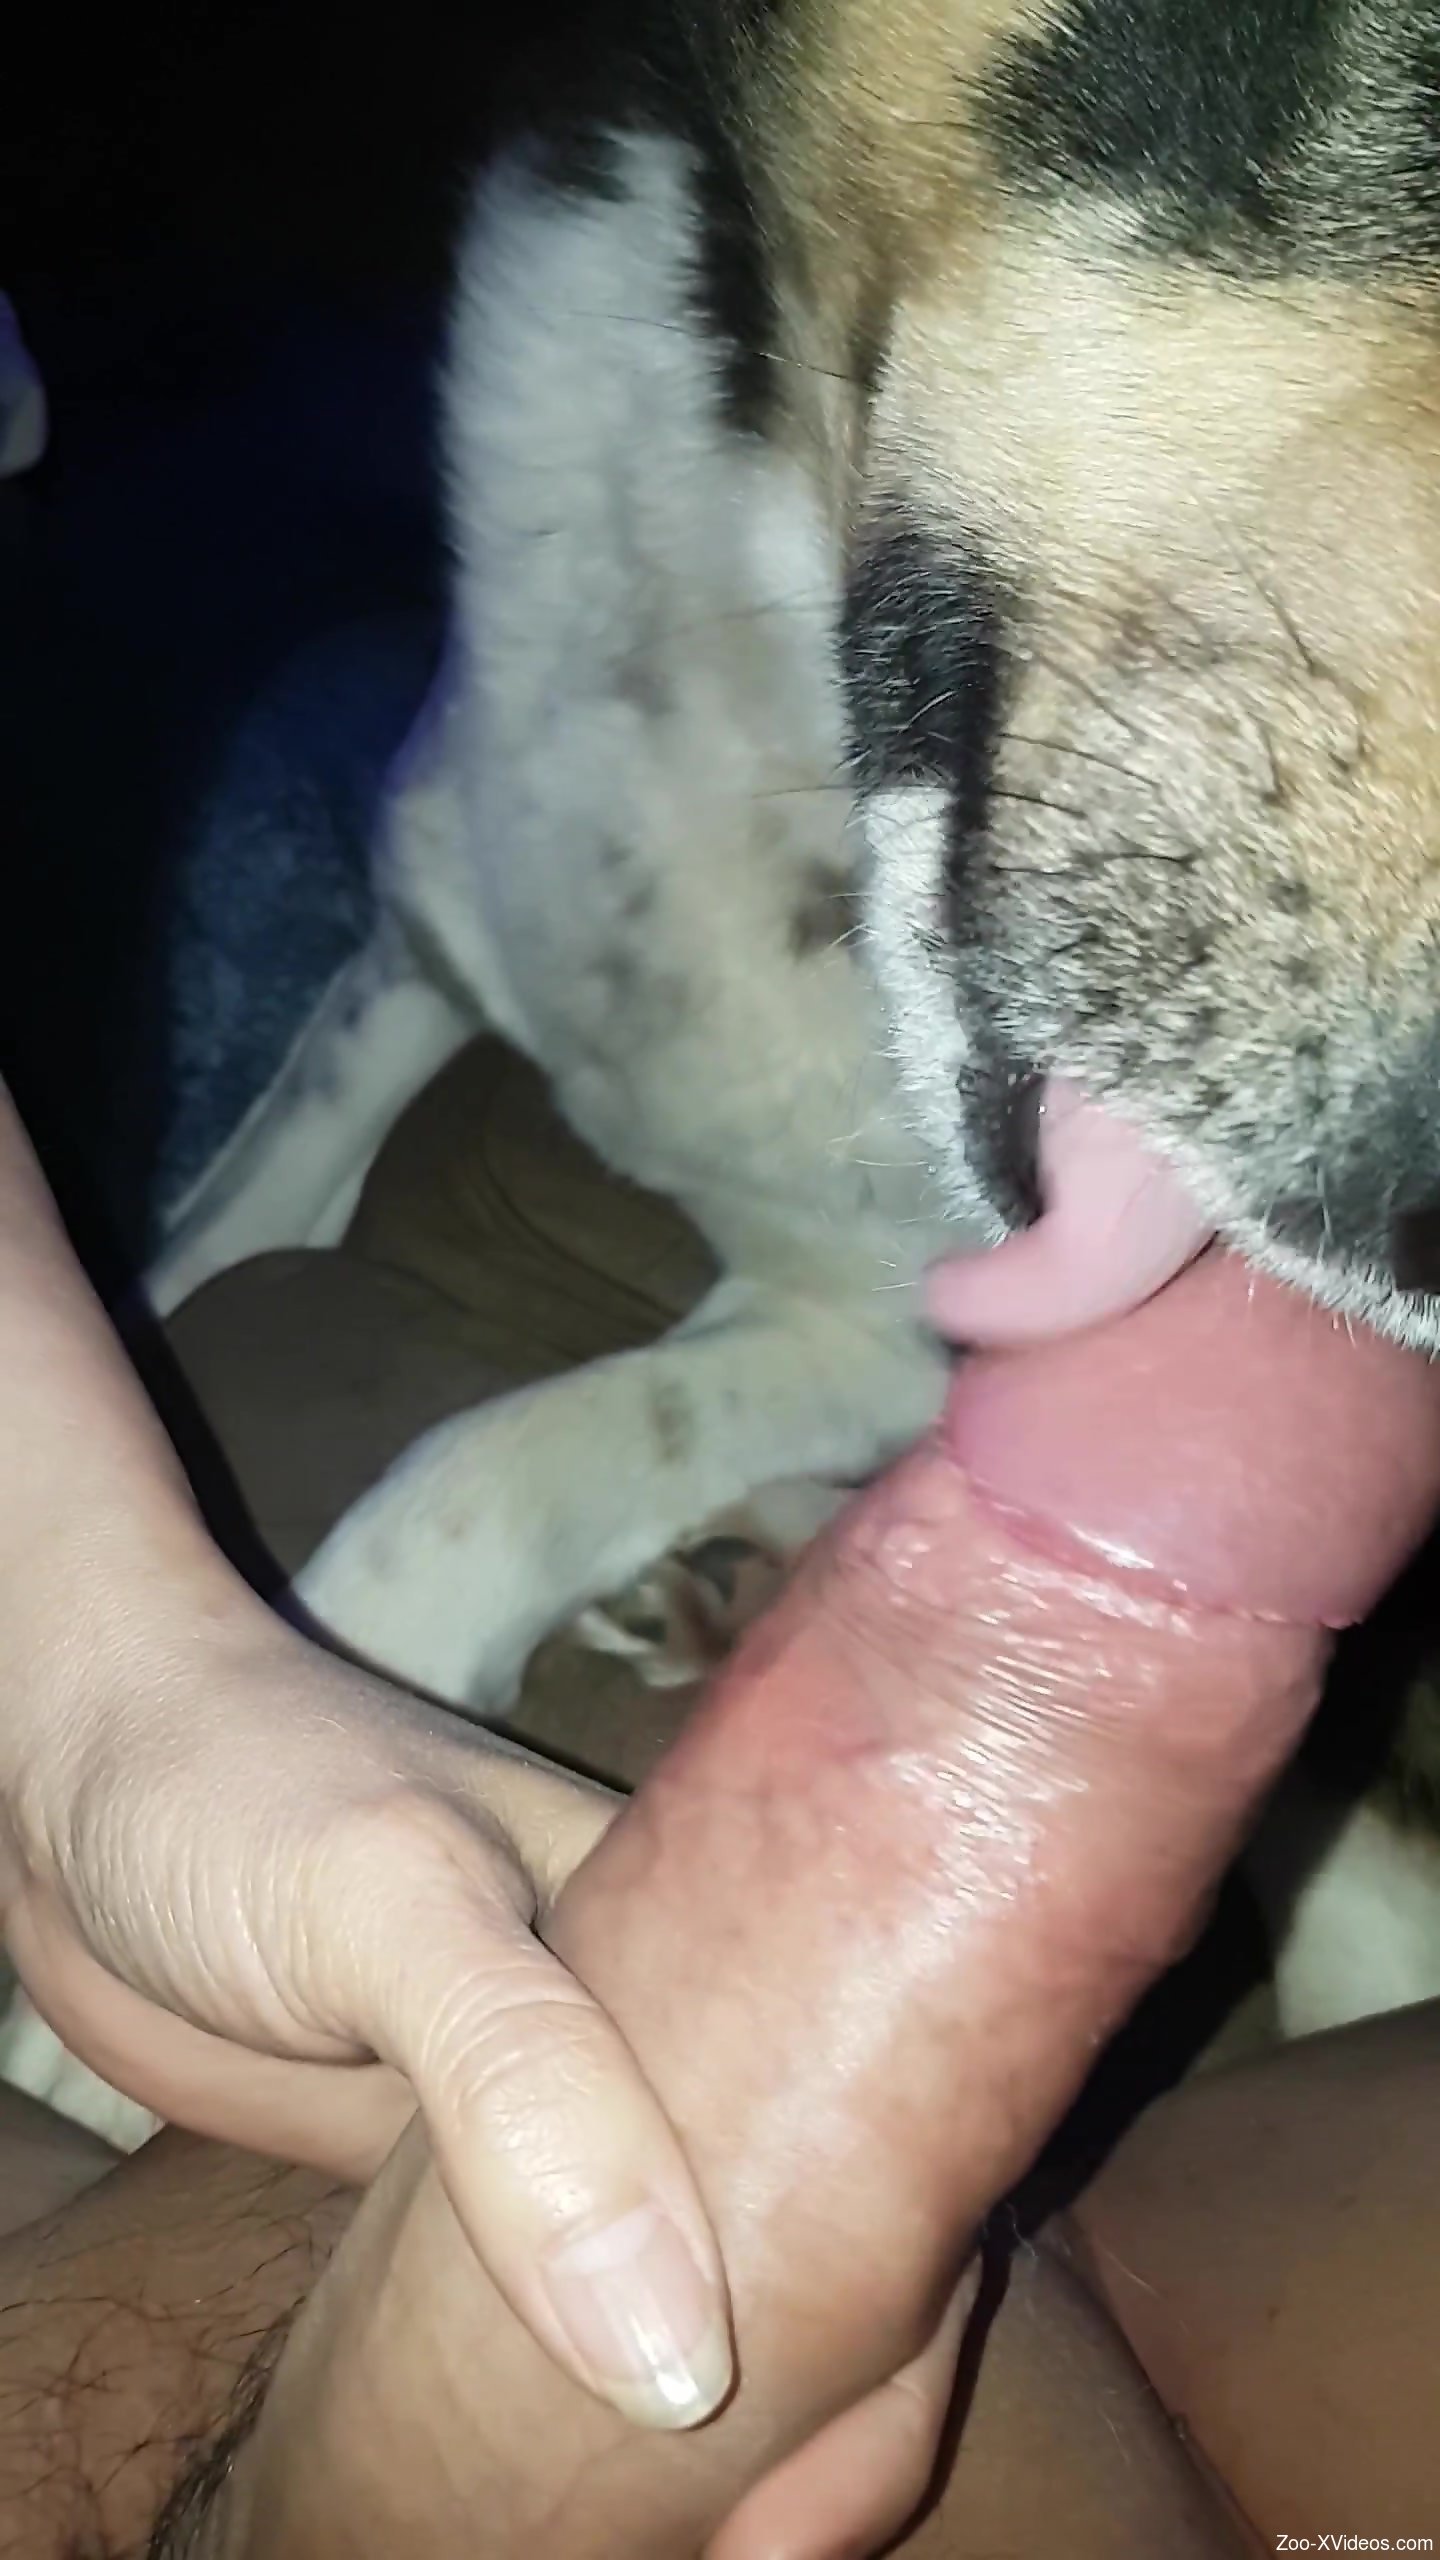 Dog licks mans penis